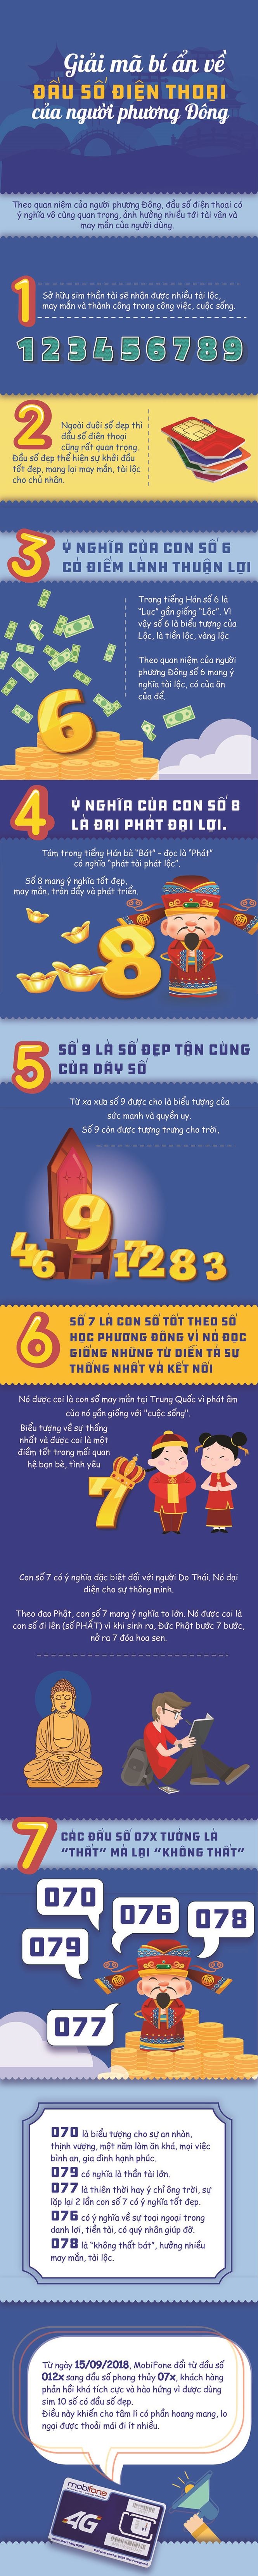 infographic tiet lo y nghia dau so dien thoai cua nguoi phuong dong